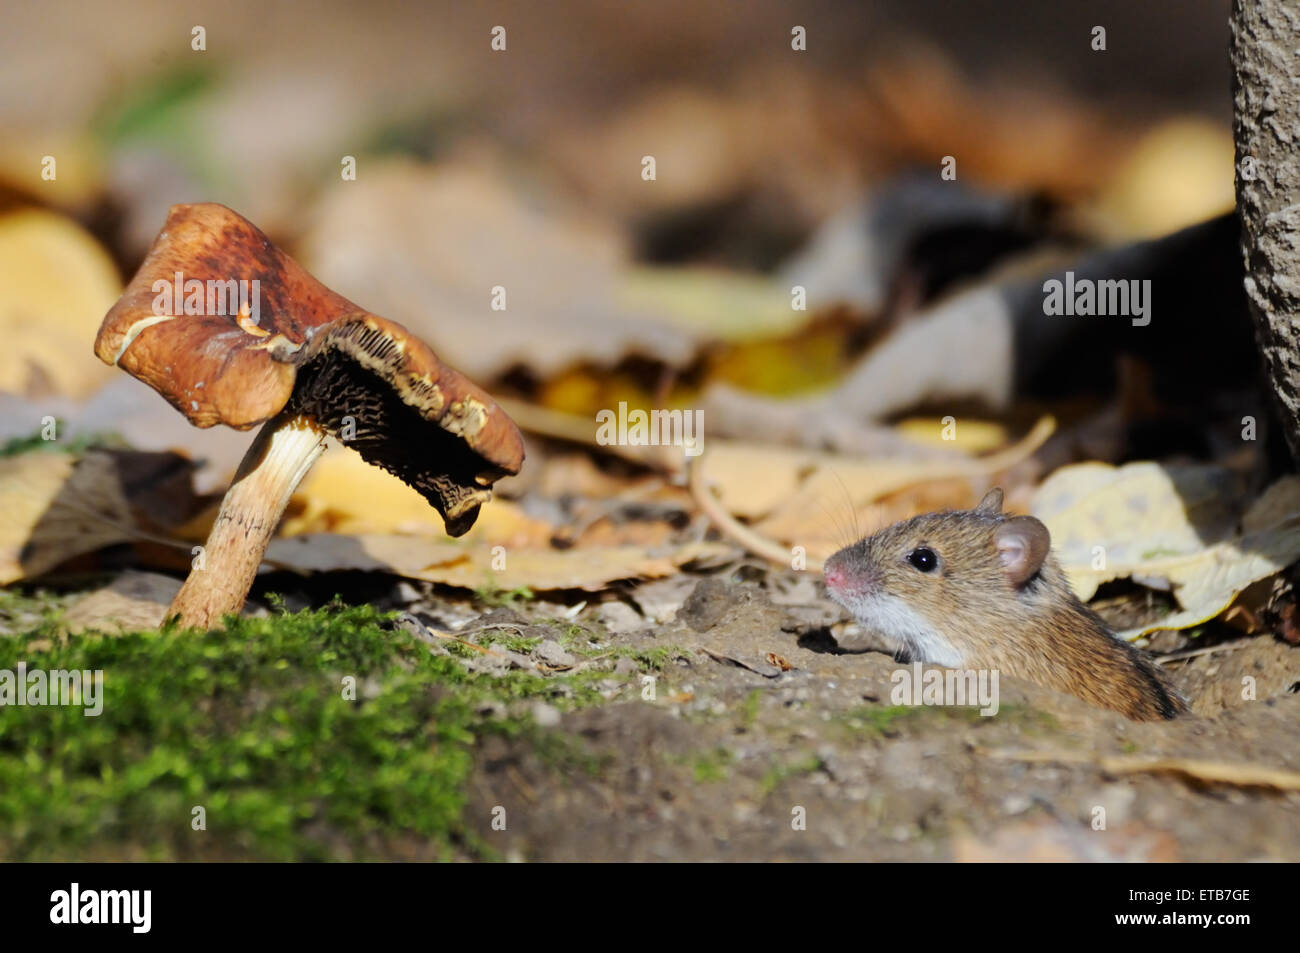 Striped Field Mouse in the burrow near mushroom Stock Photo